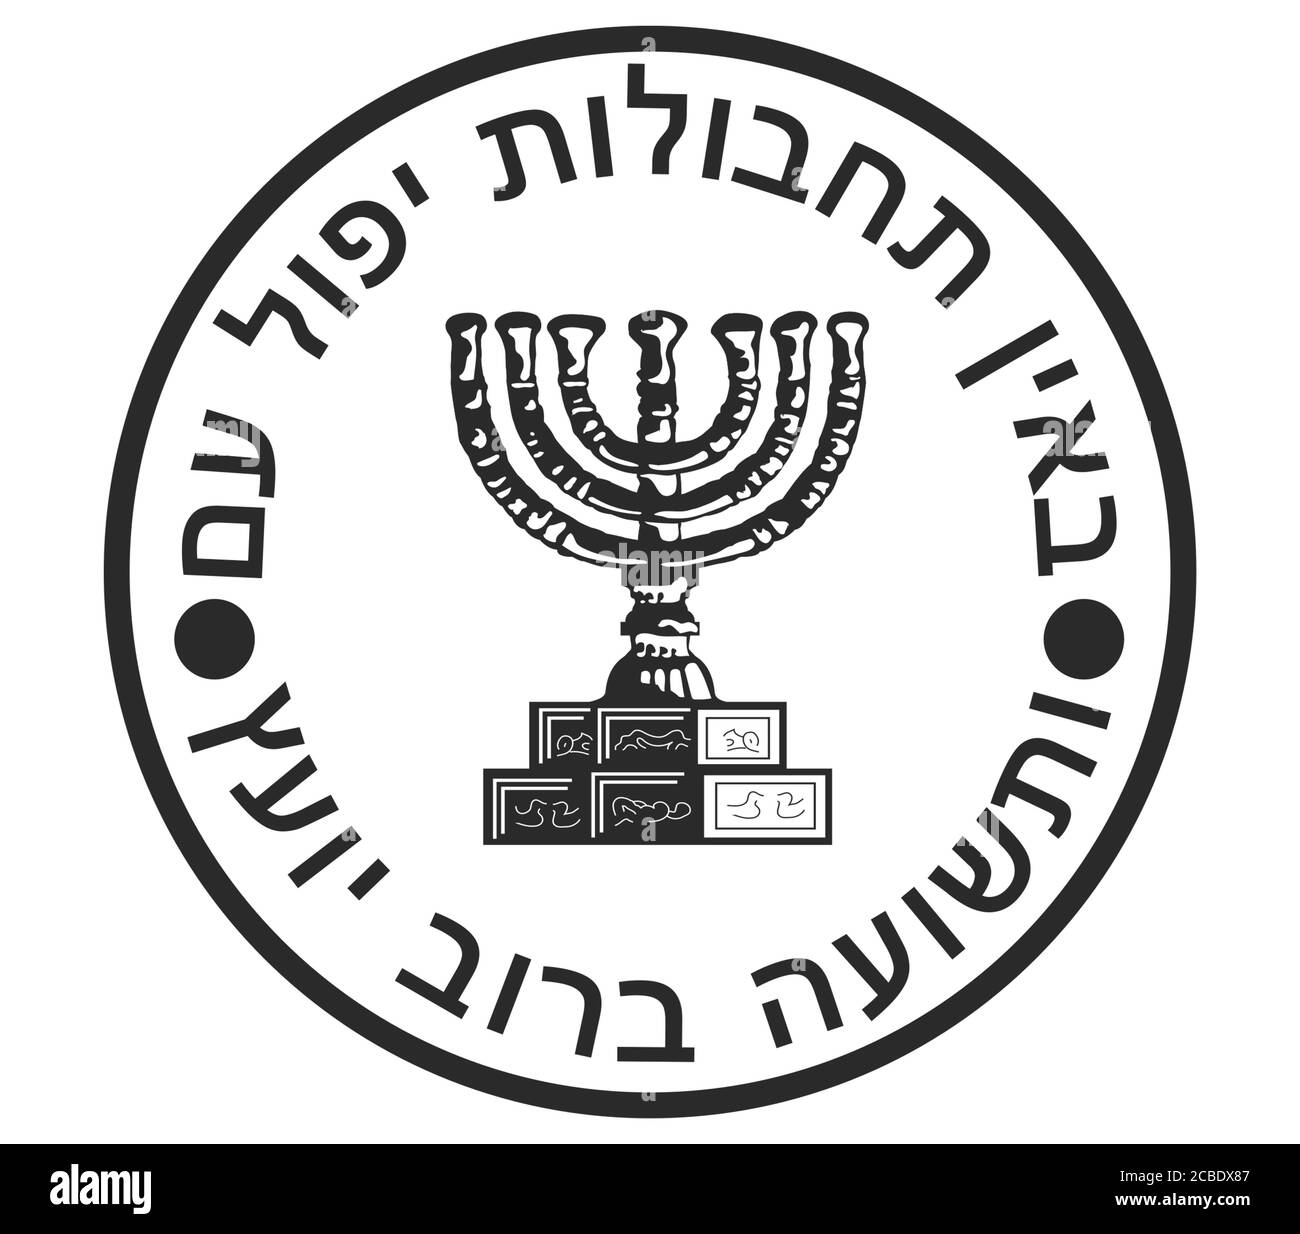 Mossad logo icon Stock Photo